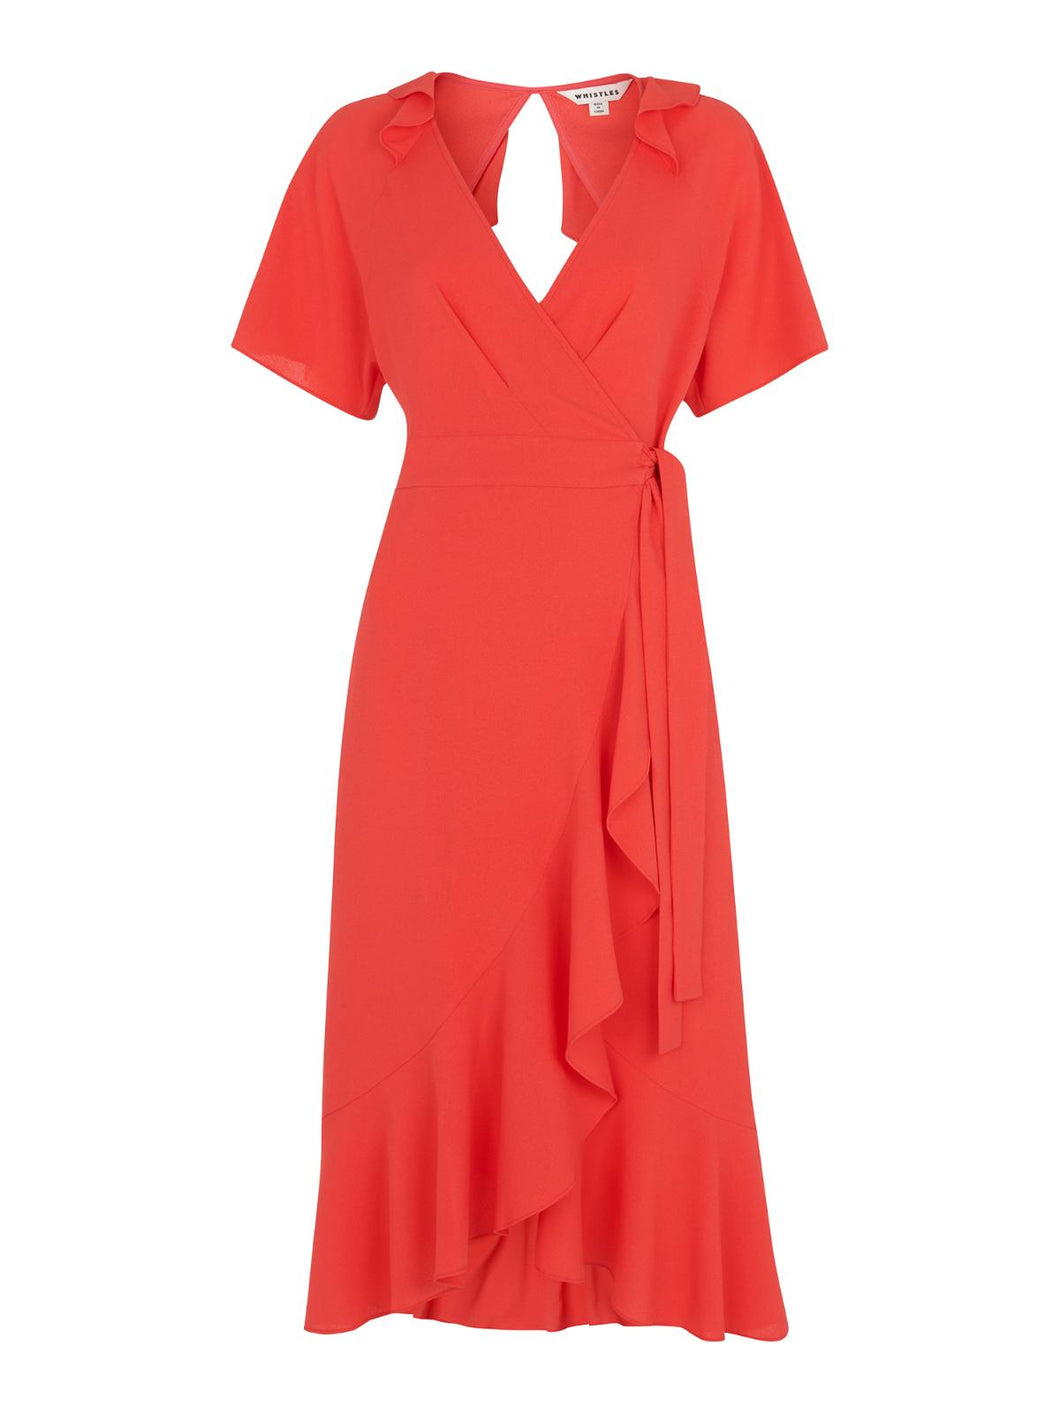 WHISTLES Abigail Frill Wrap Dress Short Sleeve Coral/Multi UK6 RRP159 BNWT